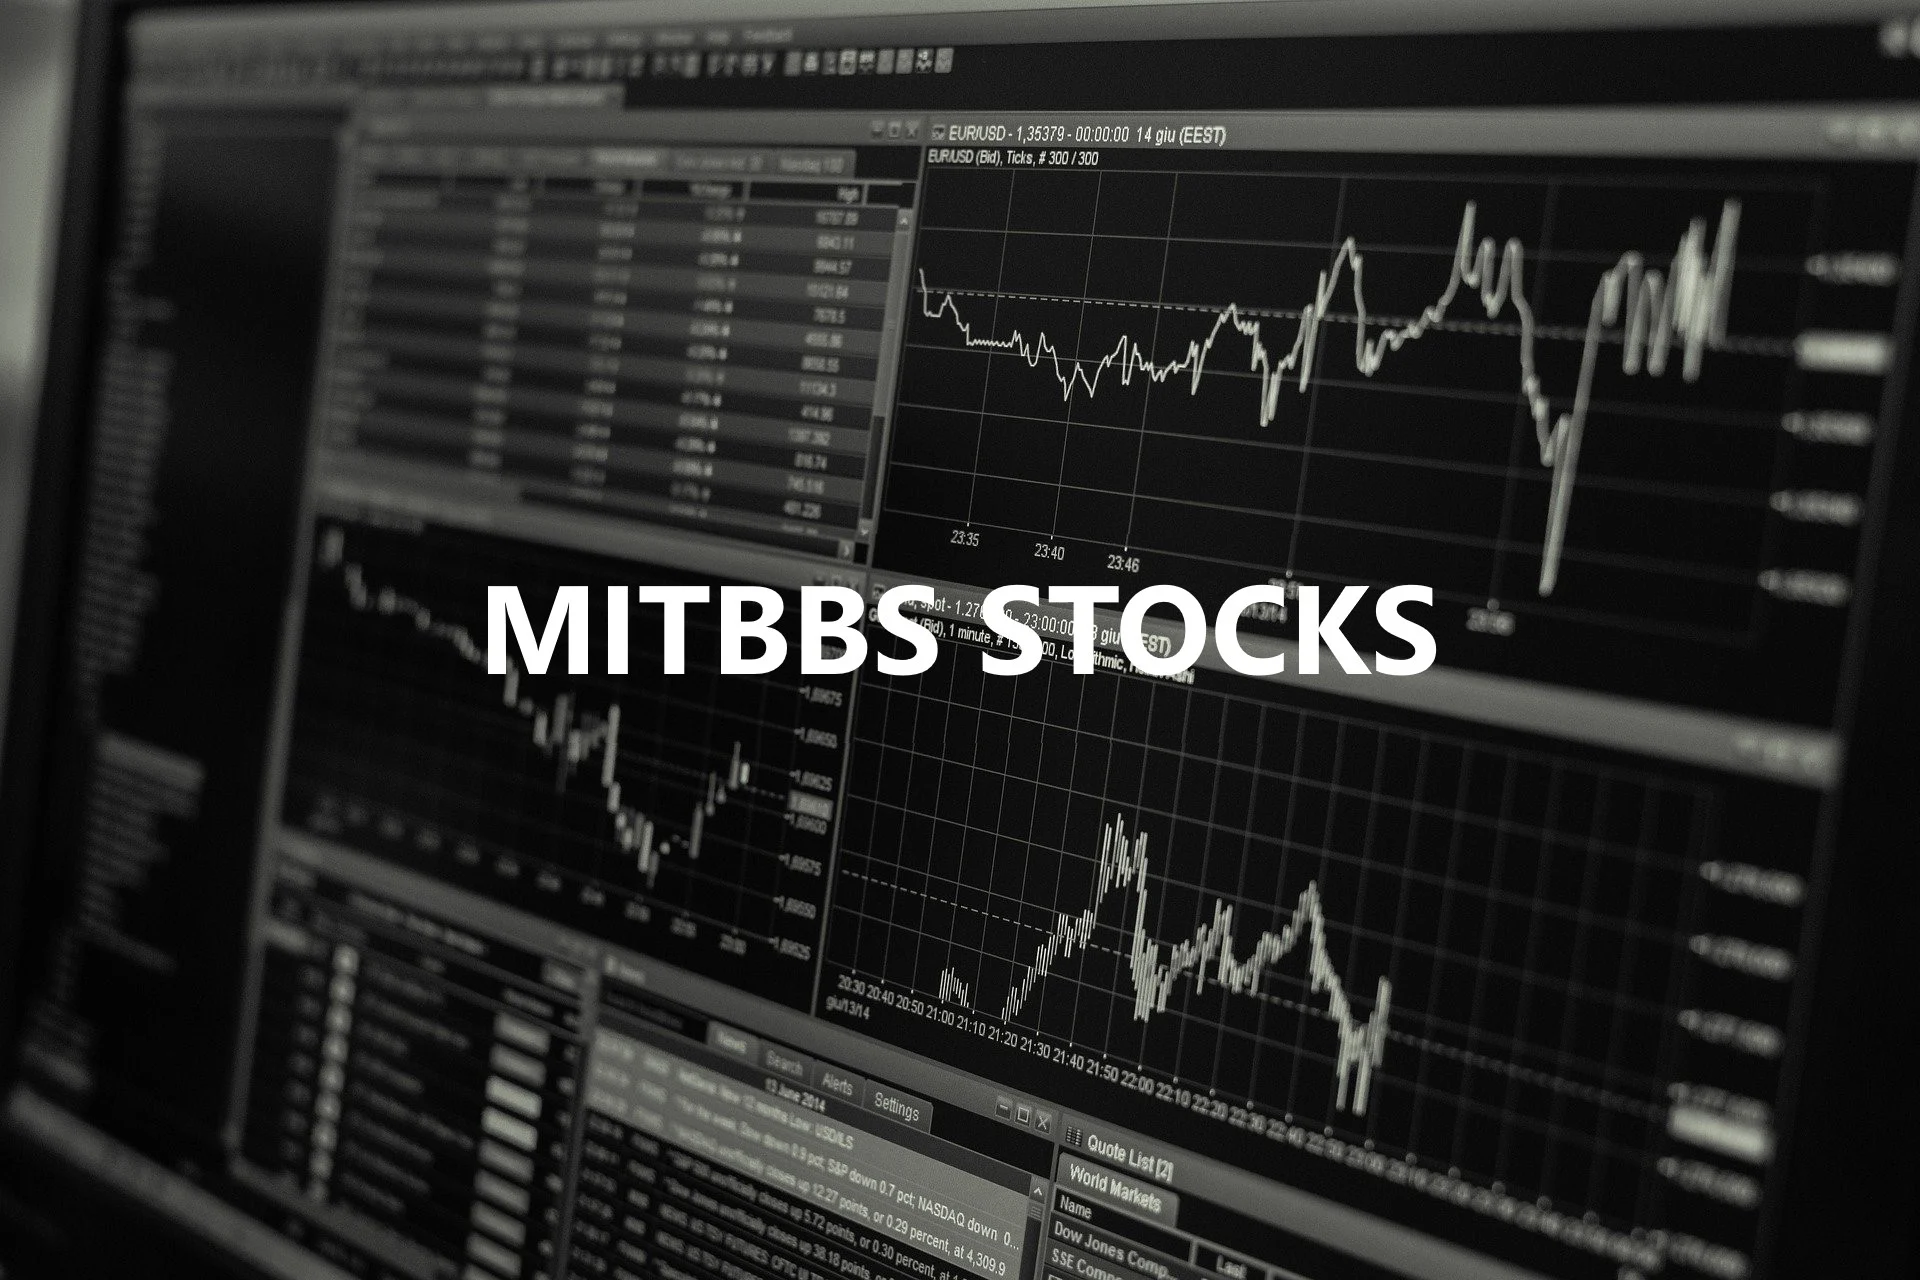 mitbbs stocks